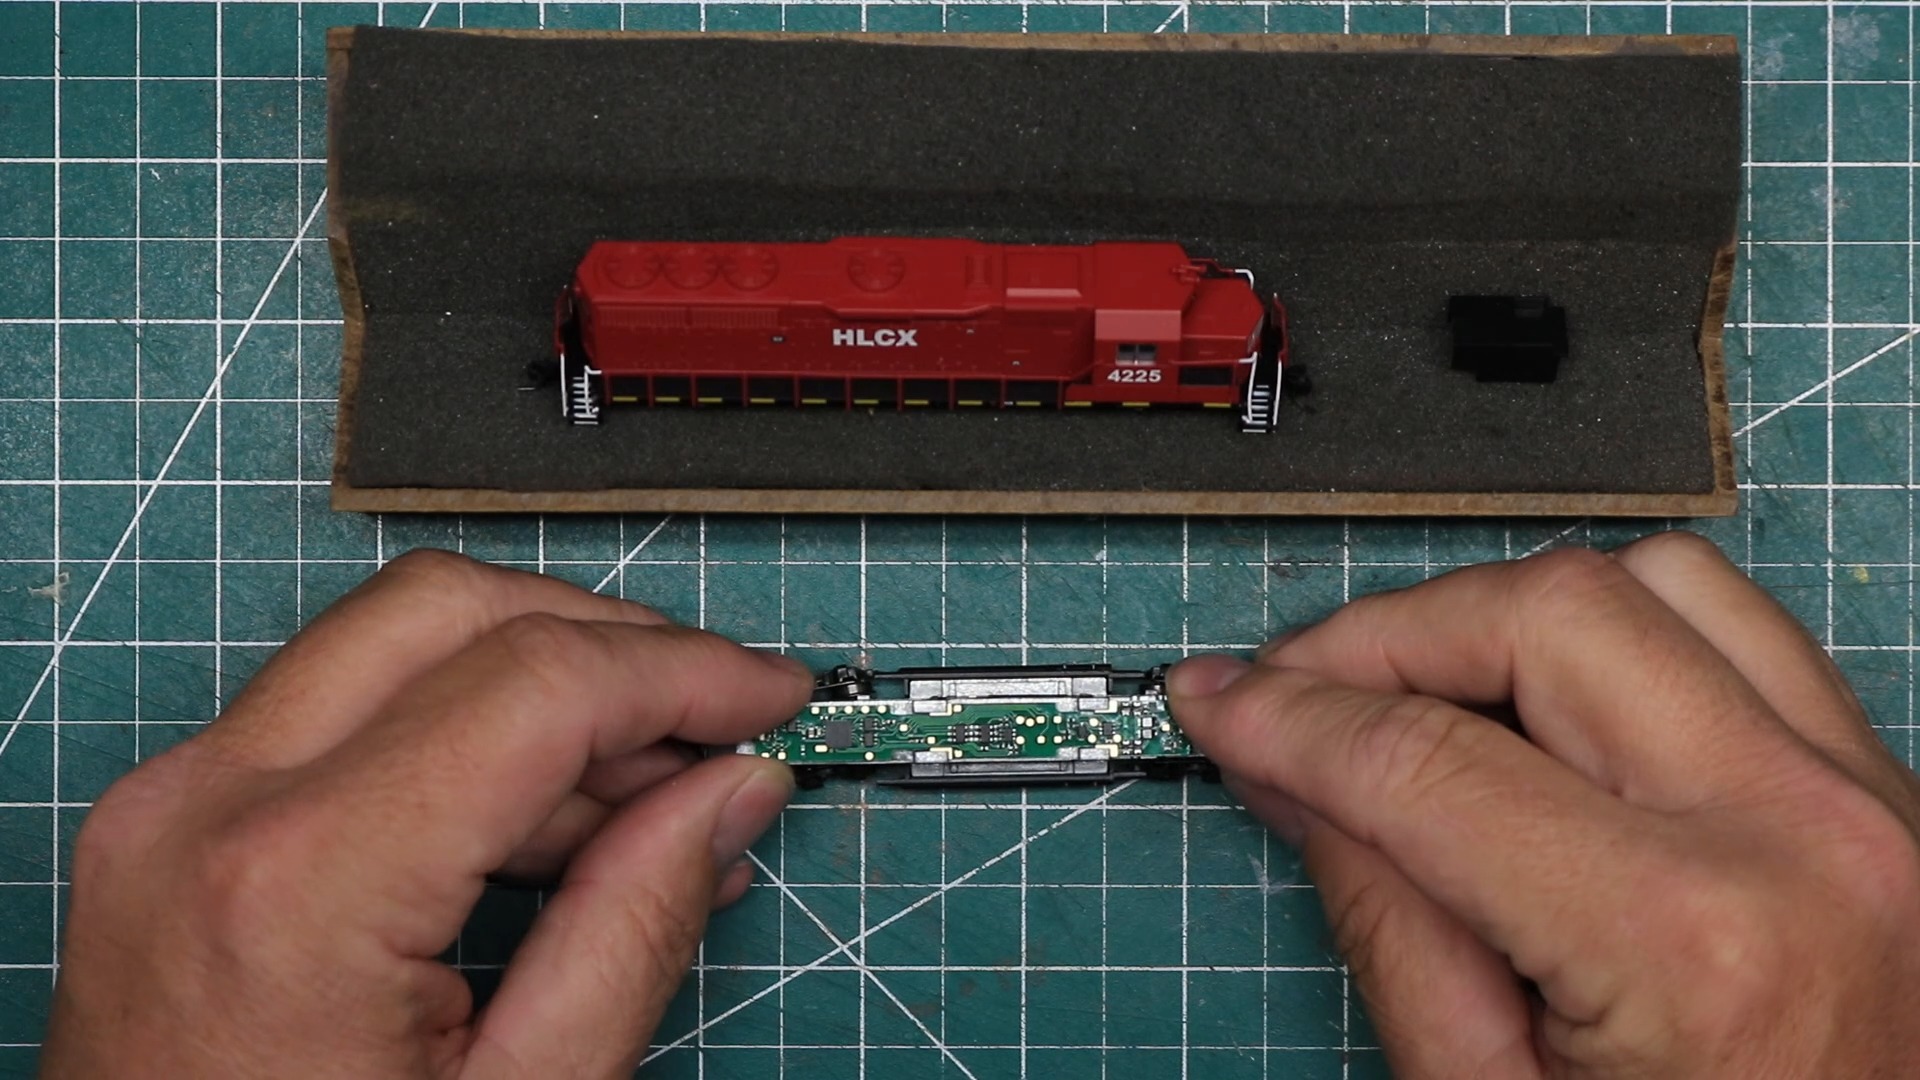 Simple Details That Make Your Locomotives Uniqueproduct featured image thumbnail.